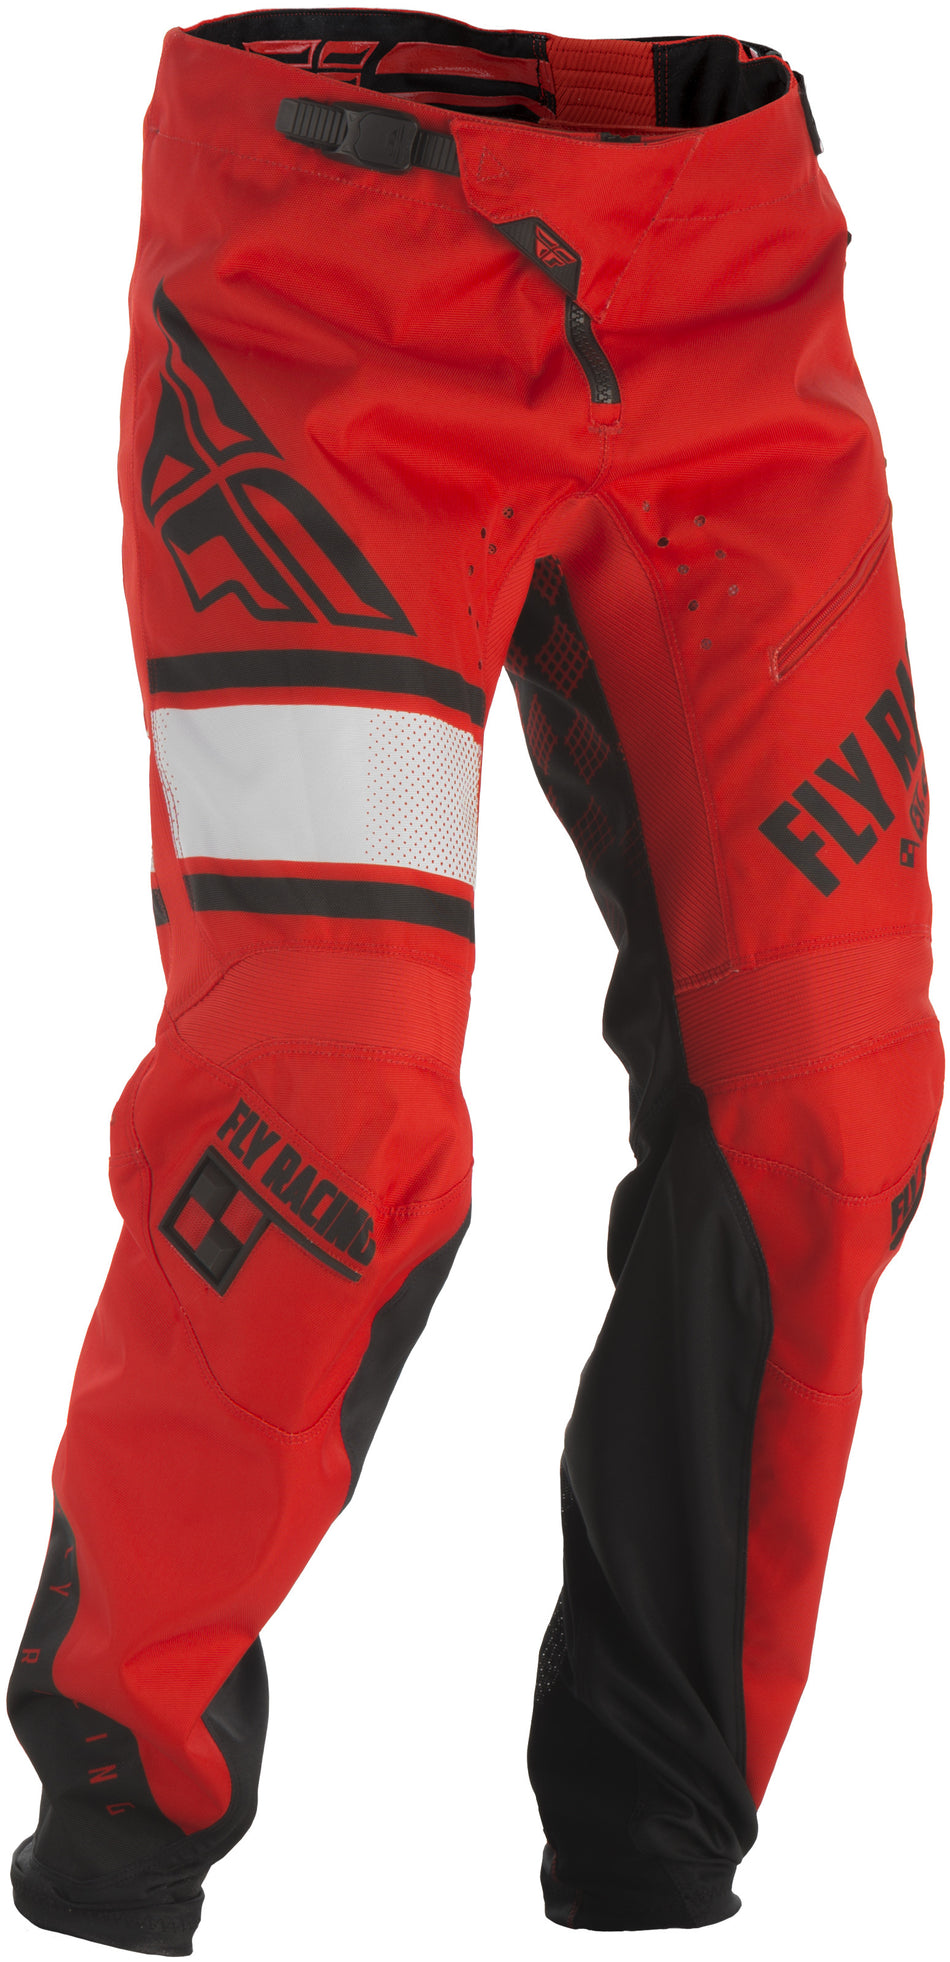 FLY RACING Kinetic Era Bicycle Pants Red/Black Sz 18 371-02218